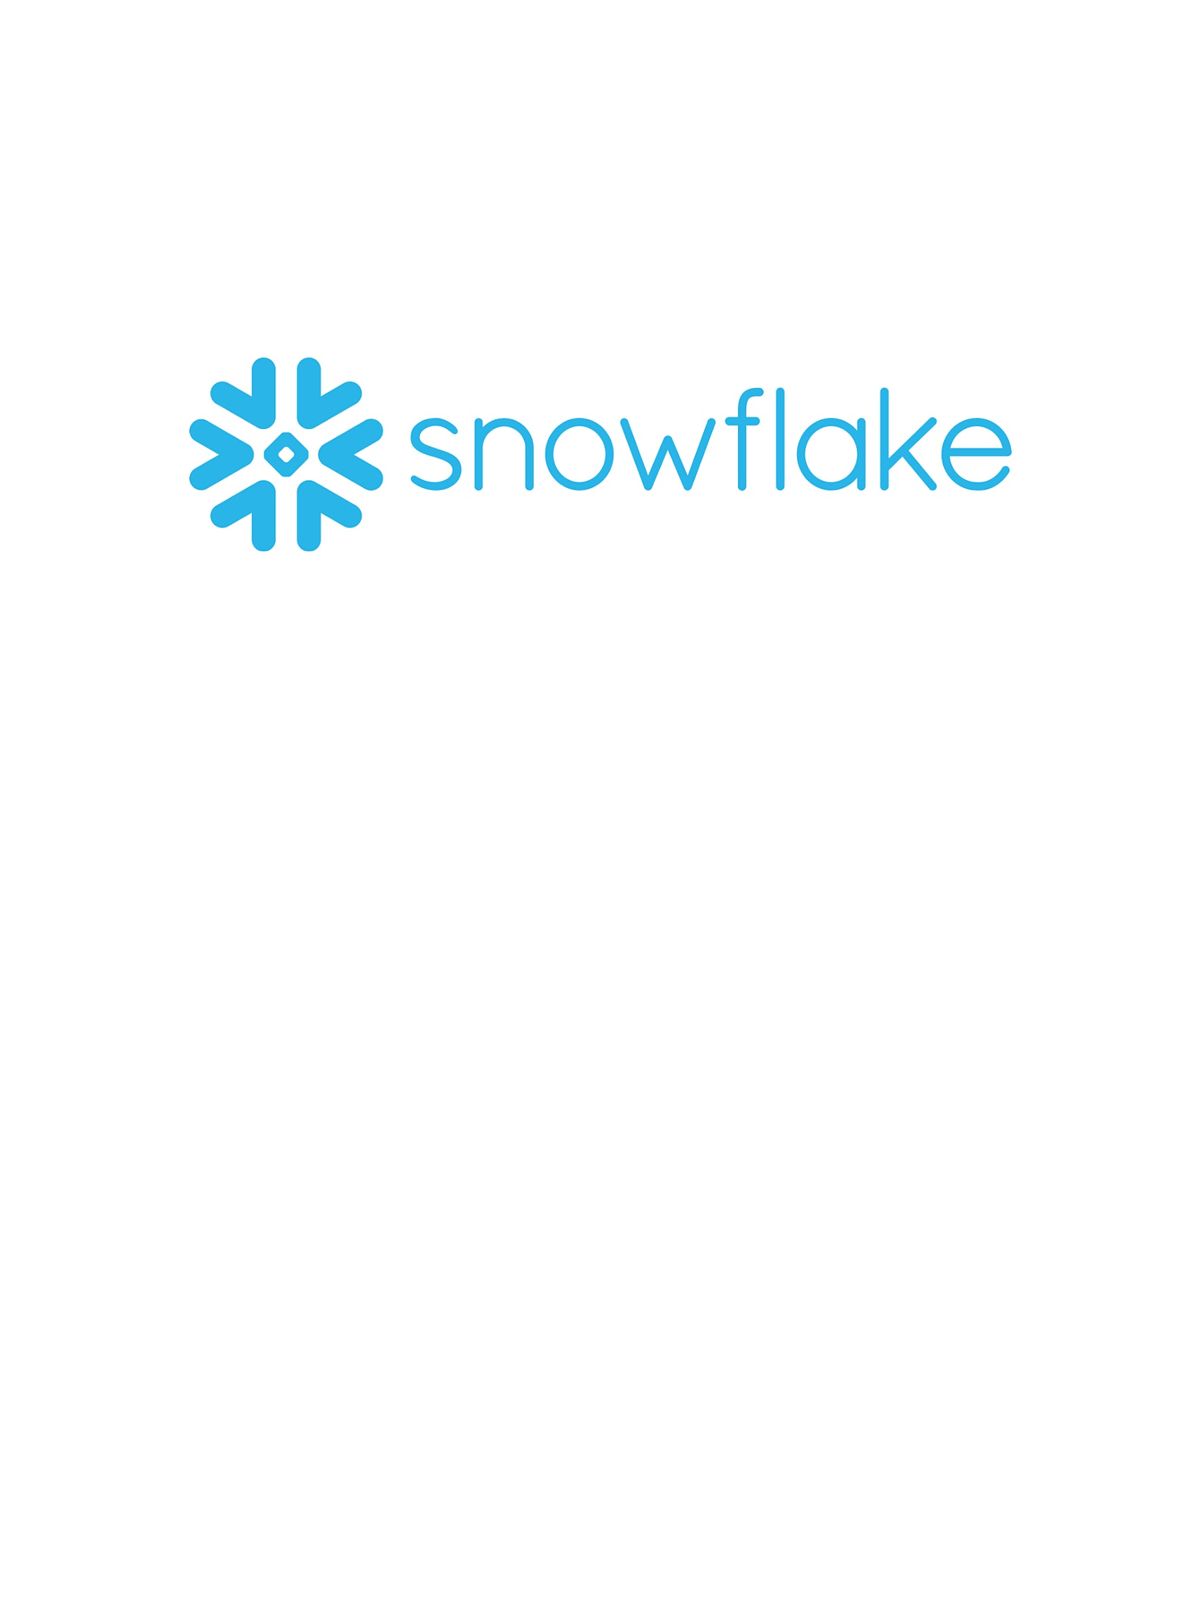 4 Weeks Snowflake cloud data platform Training Course Bethlehem